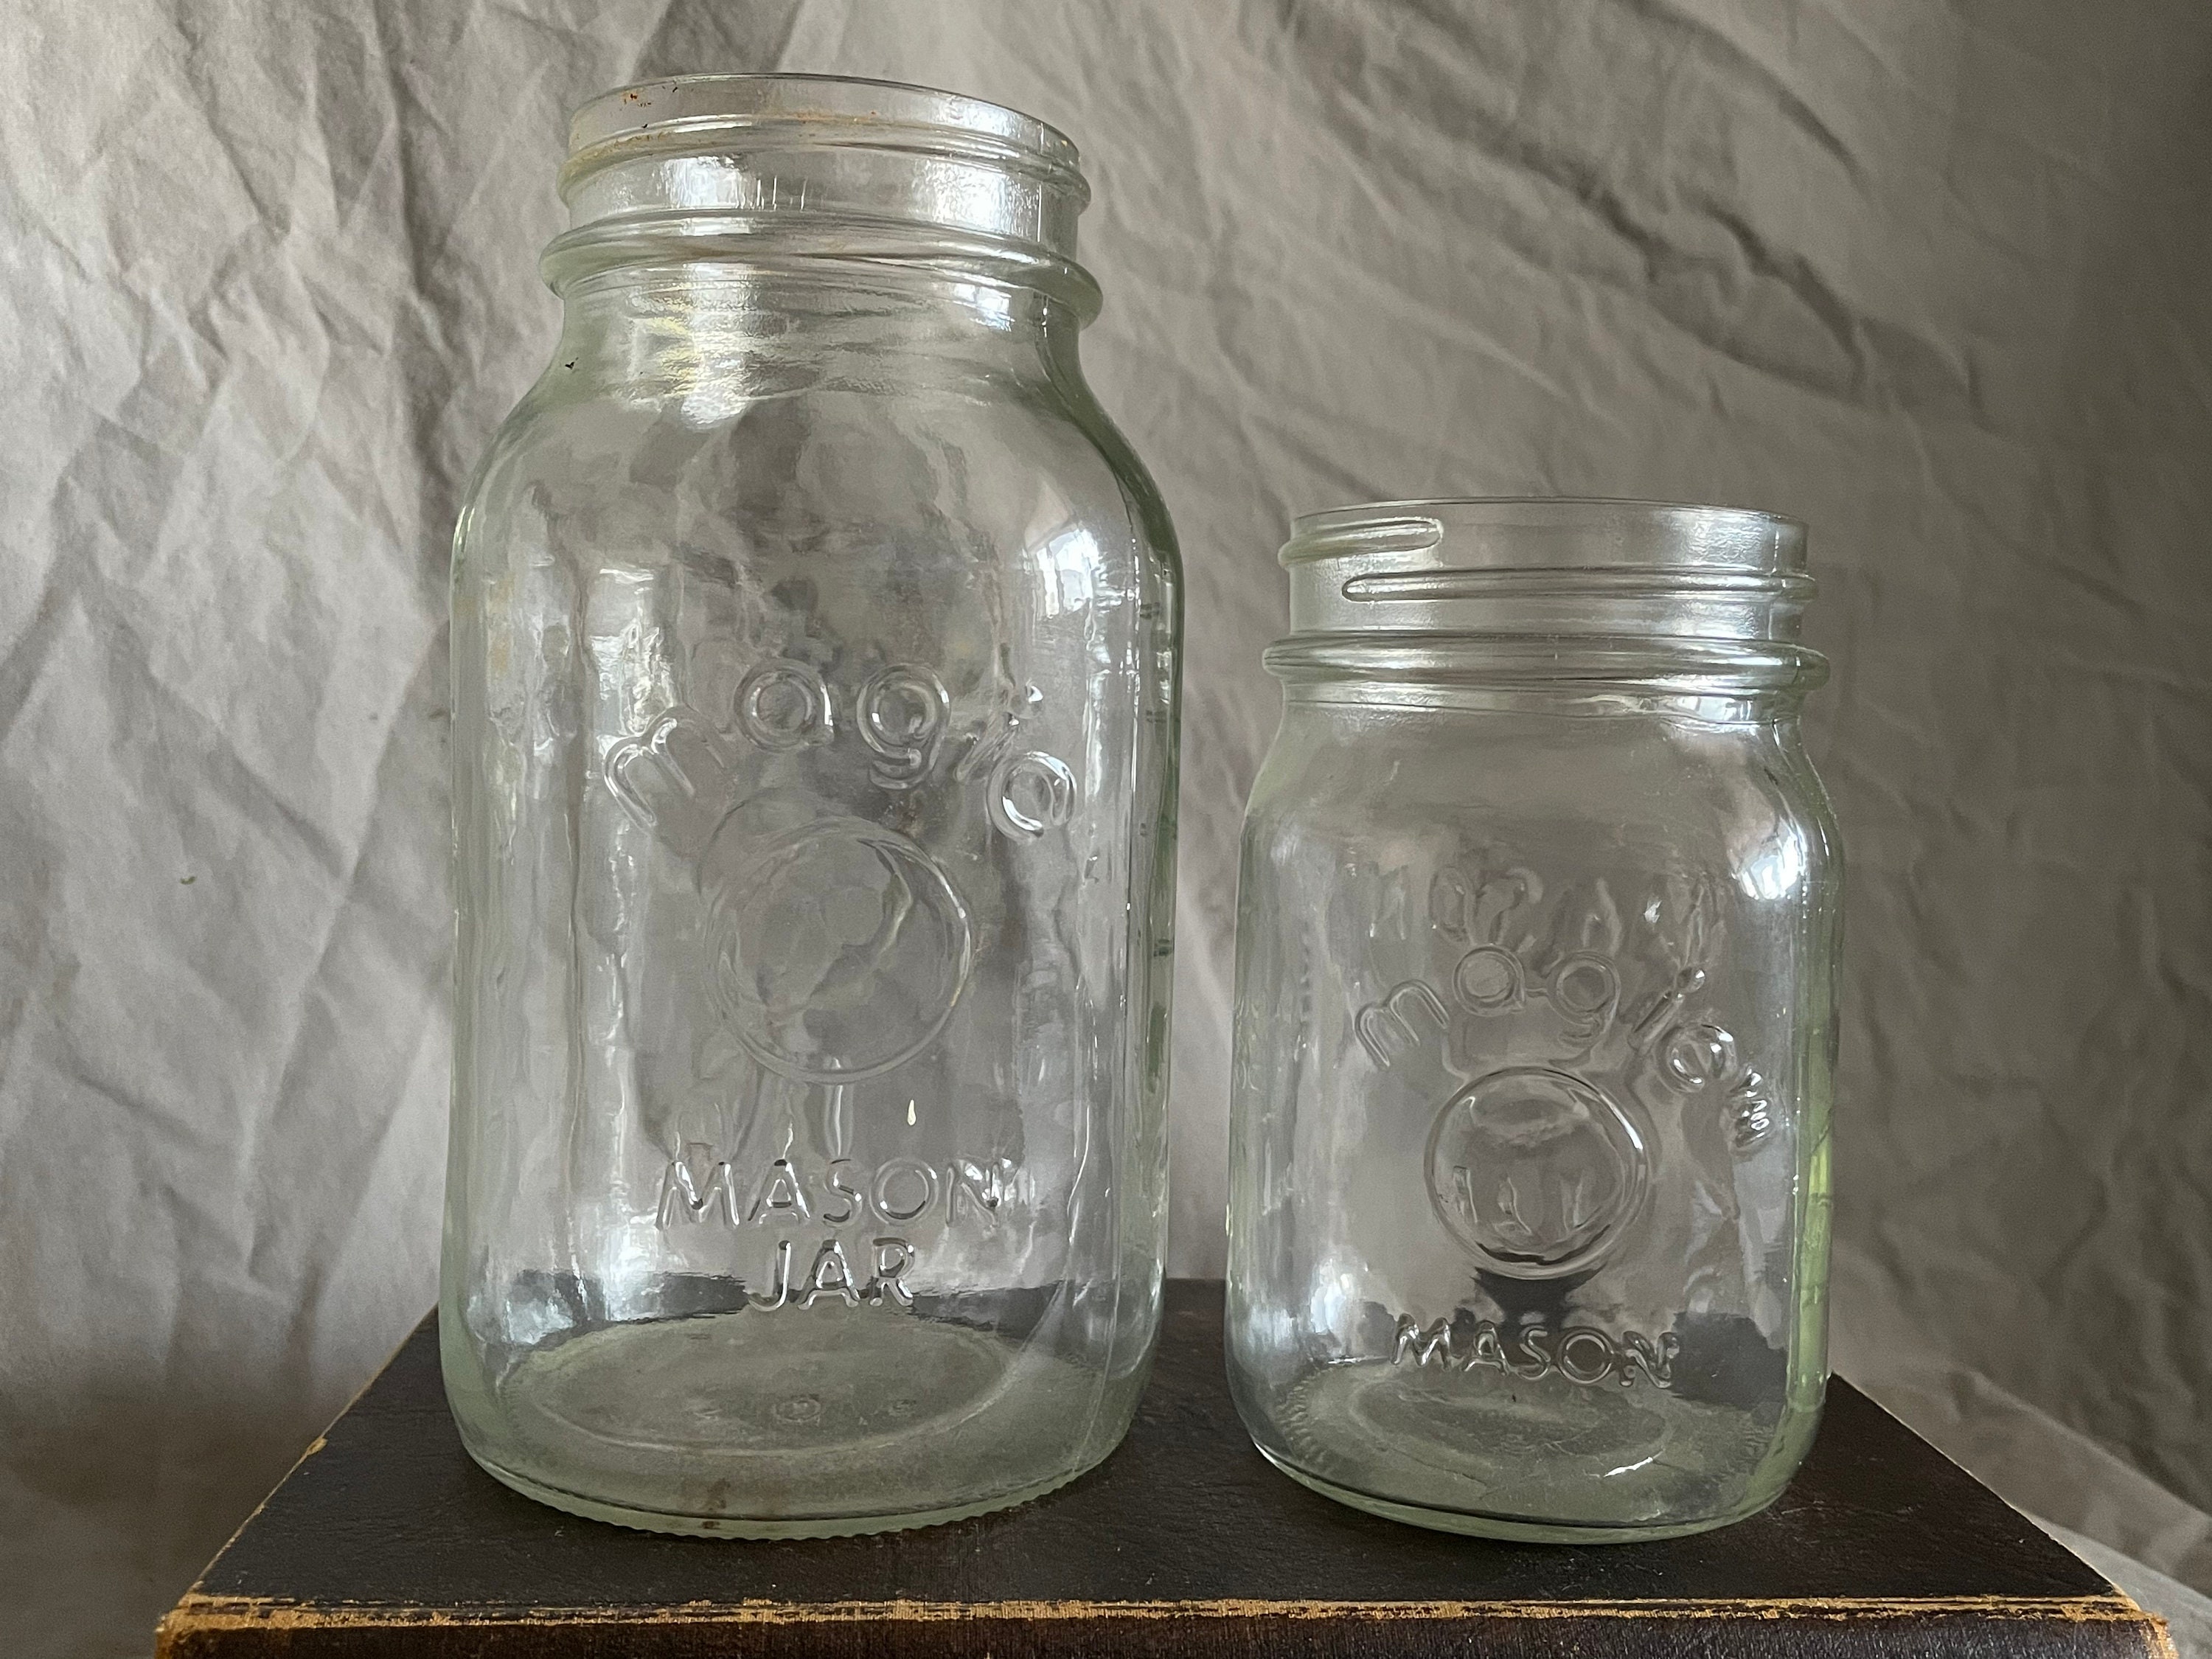 Clear Glass Mason Jar - 2 oz. – K. A. Artist Shop